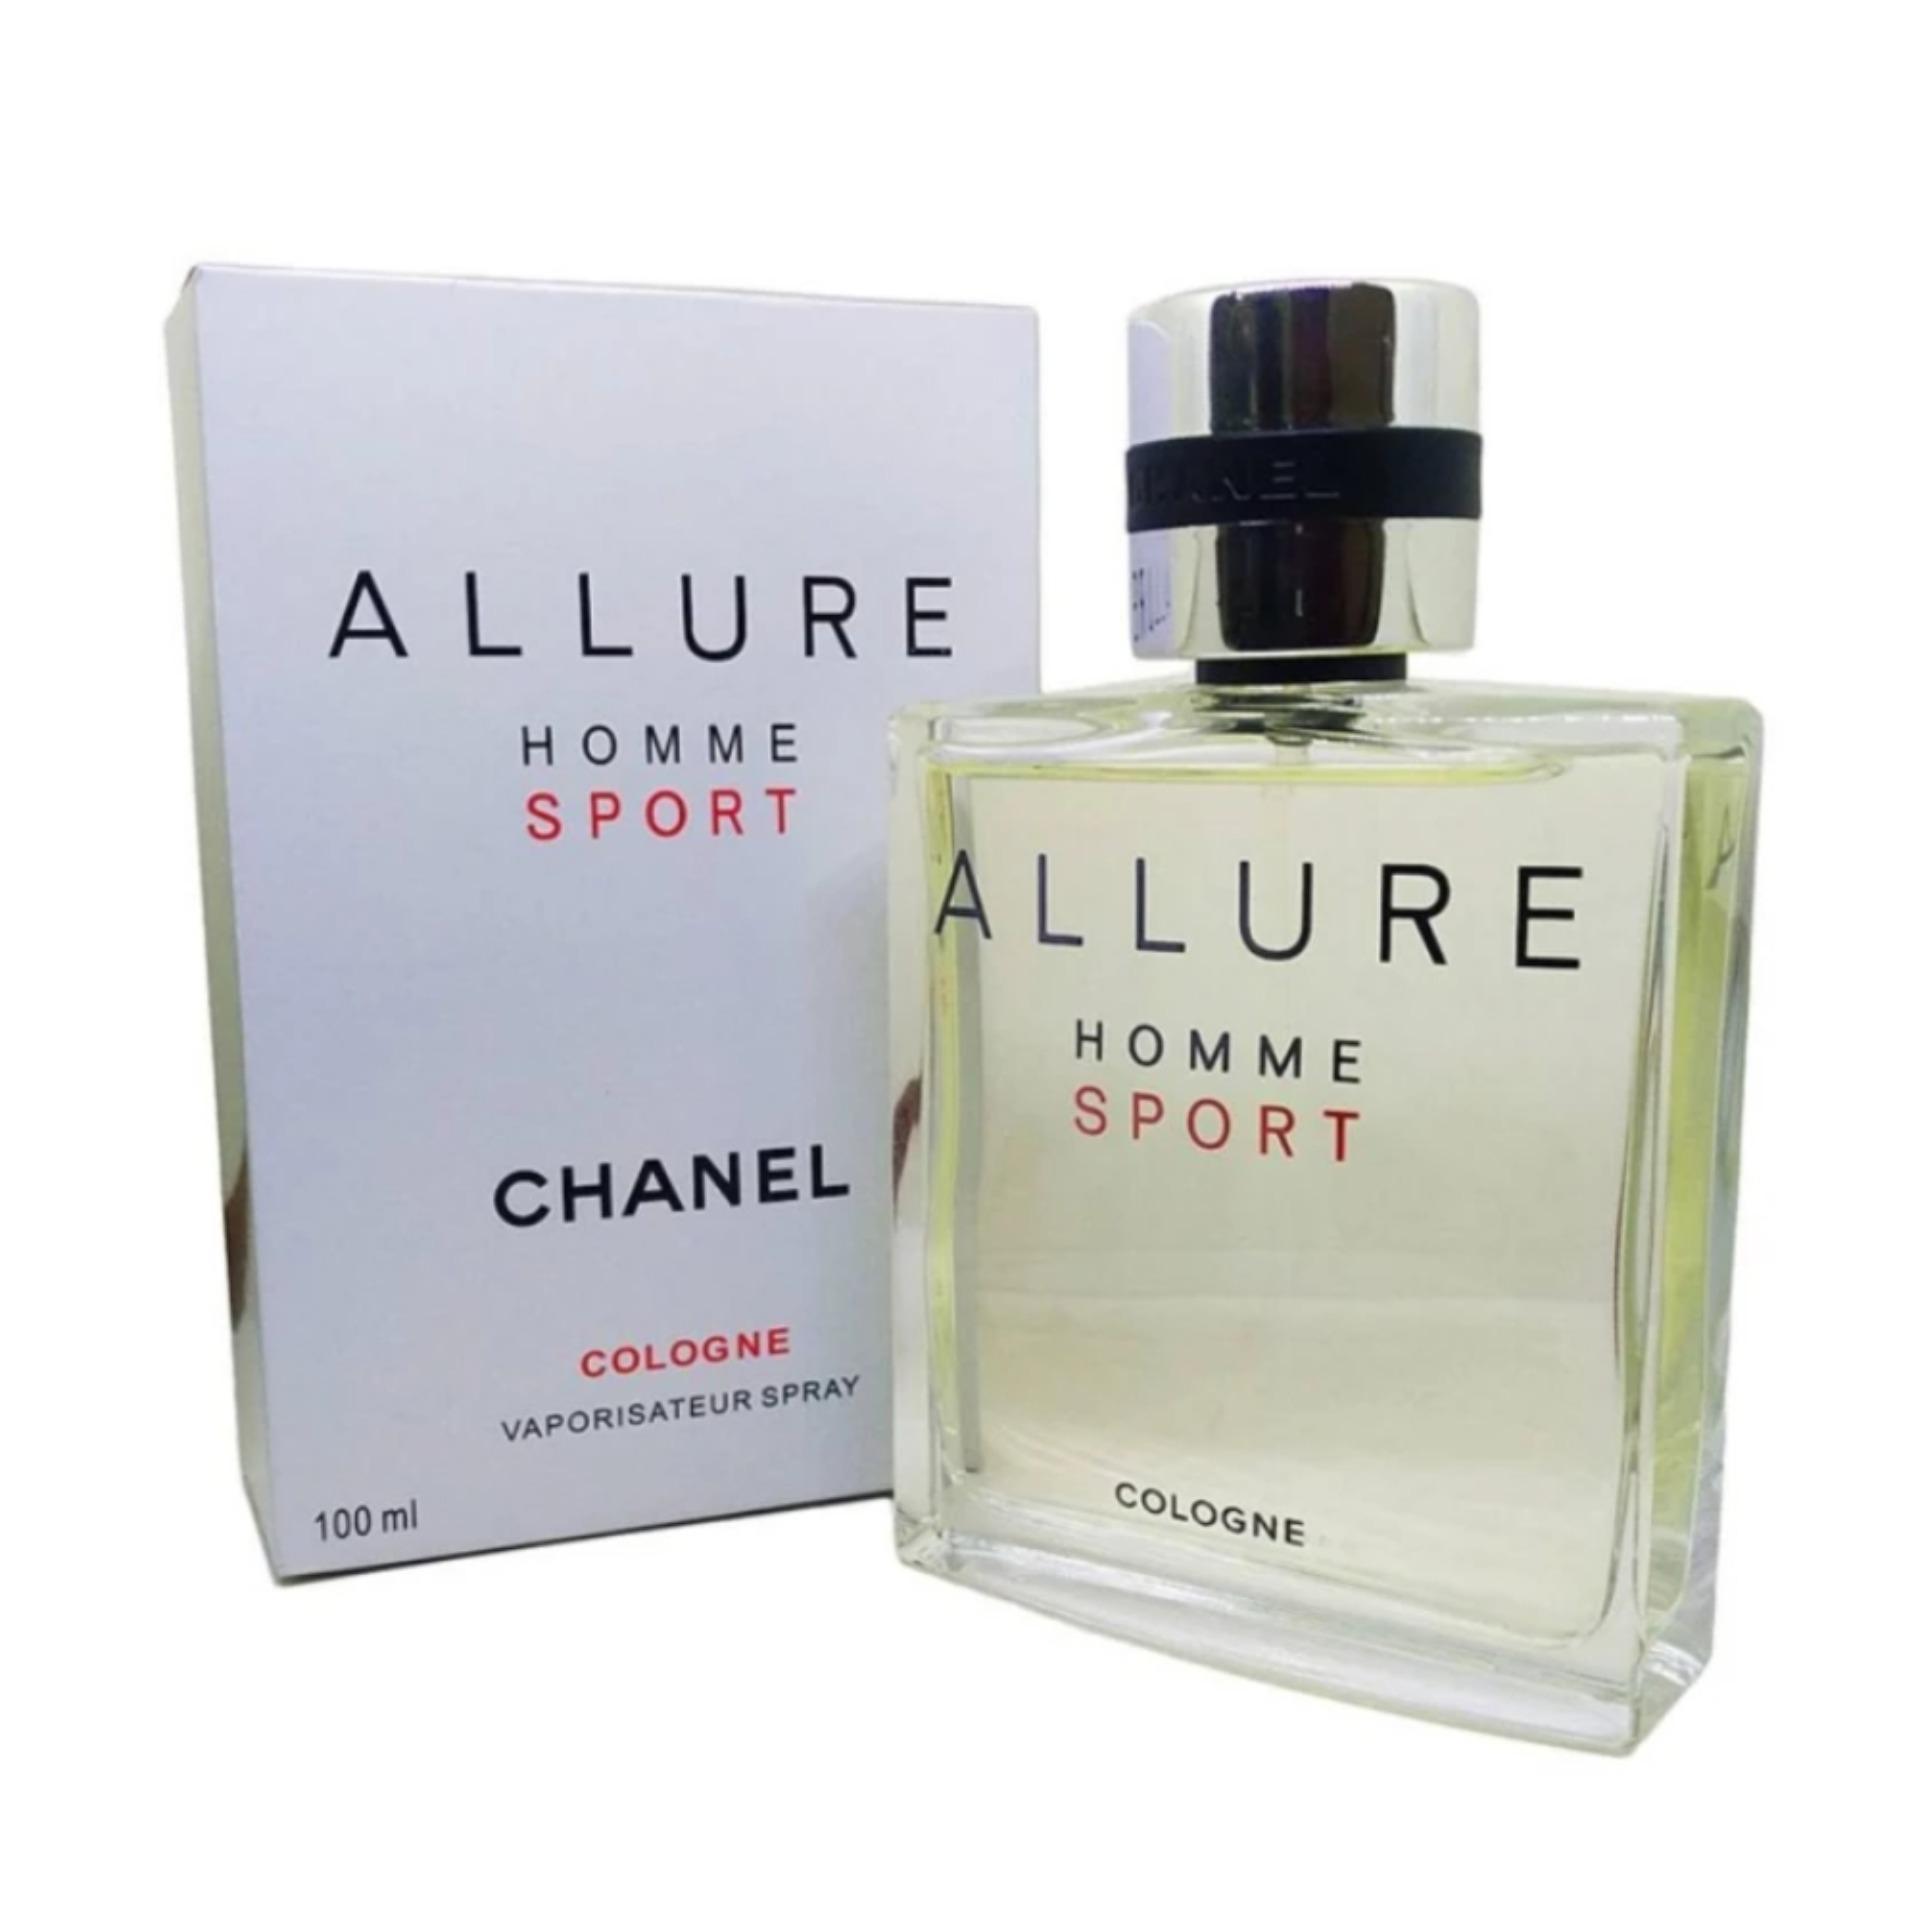 Туалетная вода chanel sport. Chanel Allure homme Sport 100ml. Chanel Allure homme Sport Cologne 100 ml. Аллюр хом Шанель 100 мл. Chanel Allure homme Sport.